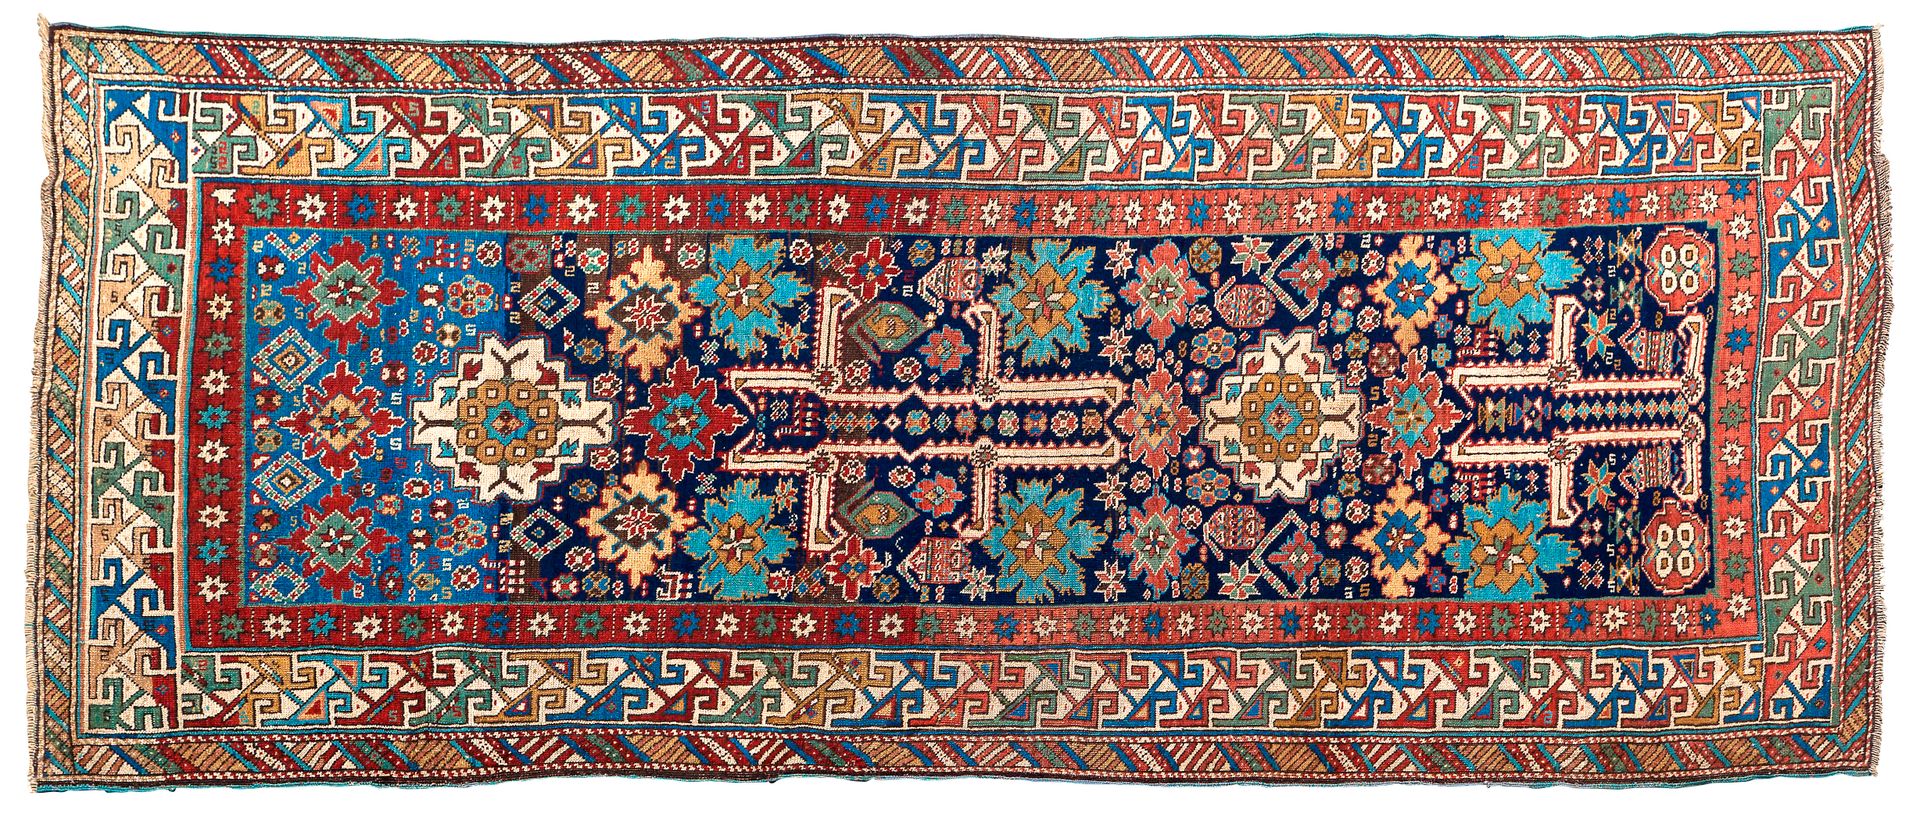 Null KOUBA carpet (Caucasus), end of the 19th century

Dimensions : 250 x 115cm.&hellip;